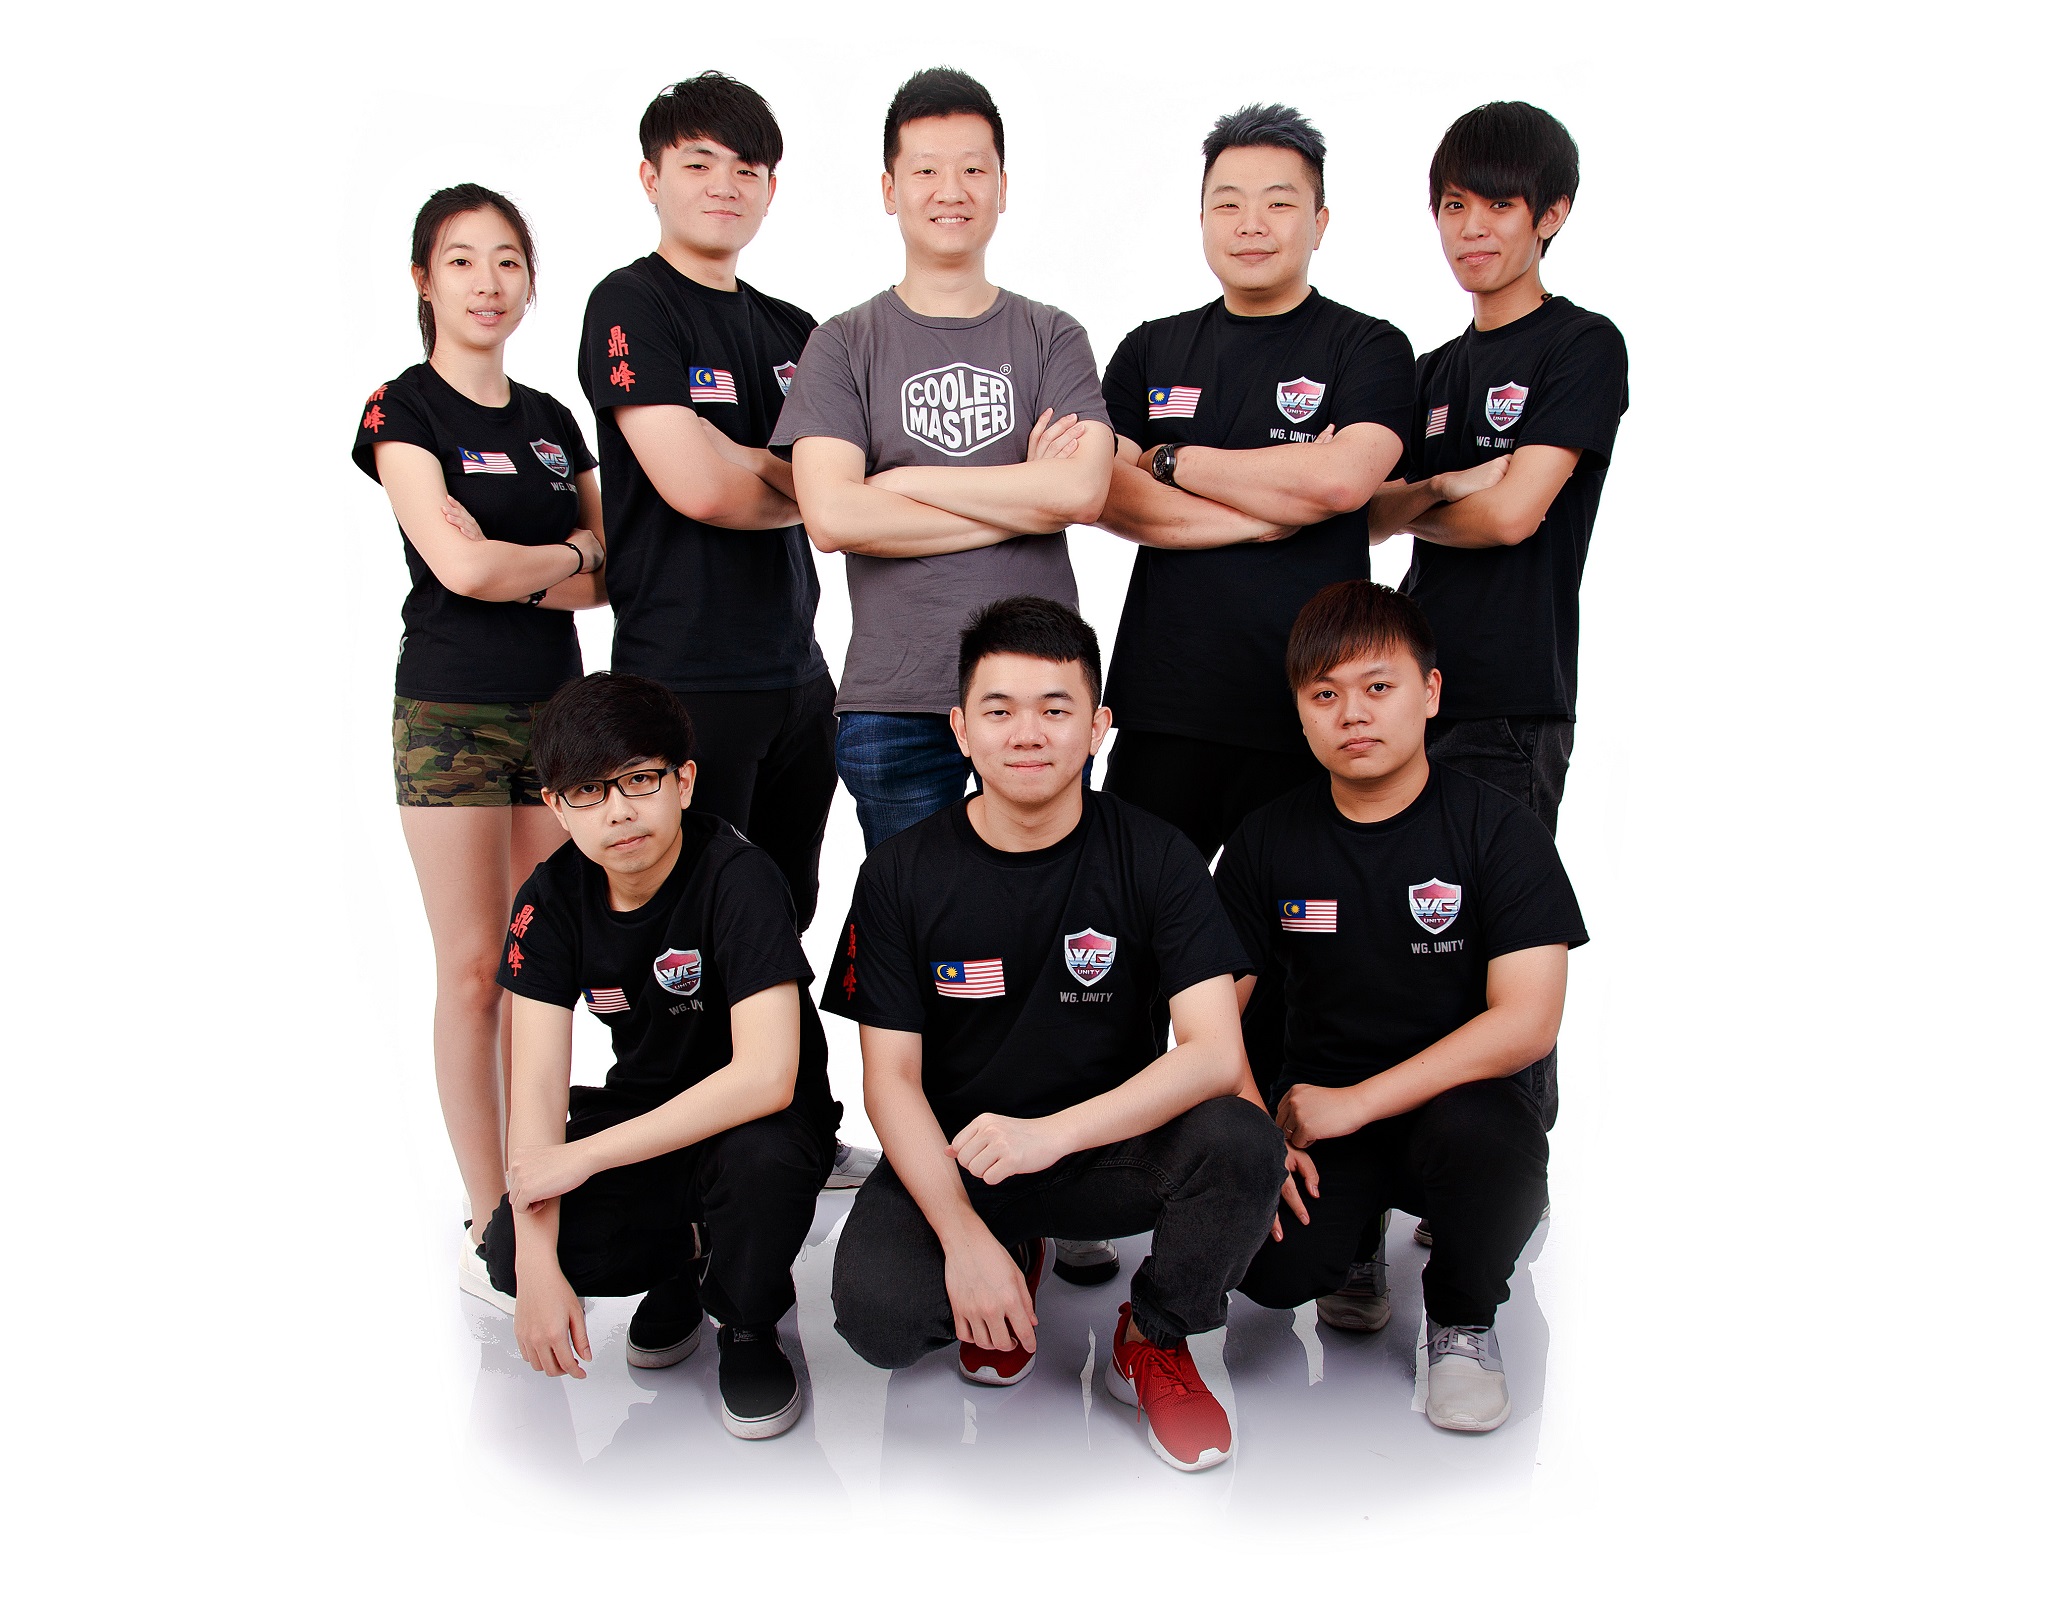 Top Left to Right: Bonnie Ng (Manager), Tue “ahfu” Soon Chuan (Captain), Eng Kiat (Cooler Master Malaysia), Wayne Kok (Coach), Lai “Ah Jit” Jay Son Bottom Left to Right: Raphael ‘KaNG’ Chua, Neng “Wenn.” Ee Wooi, Kam ‘NaNa’ Boon Seng